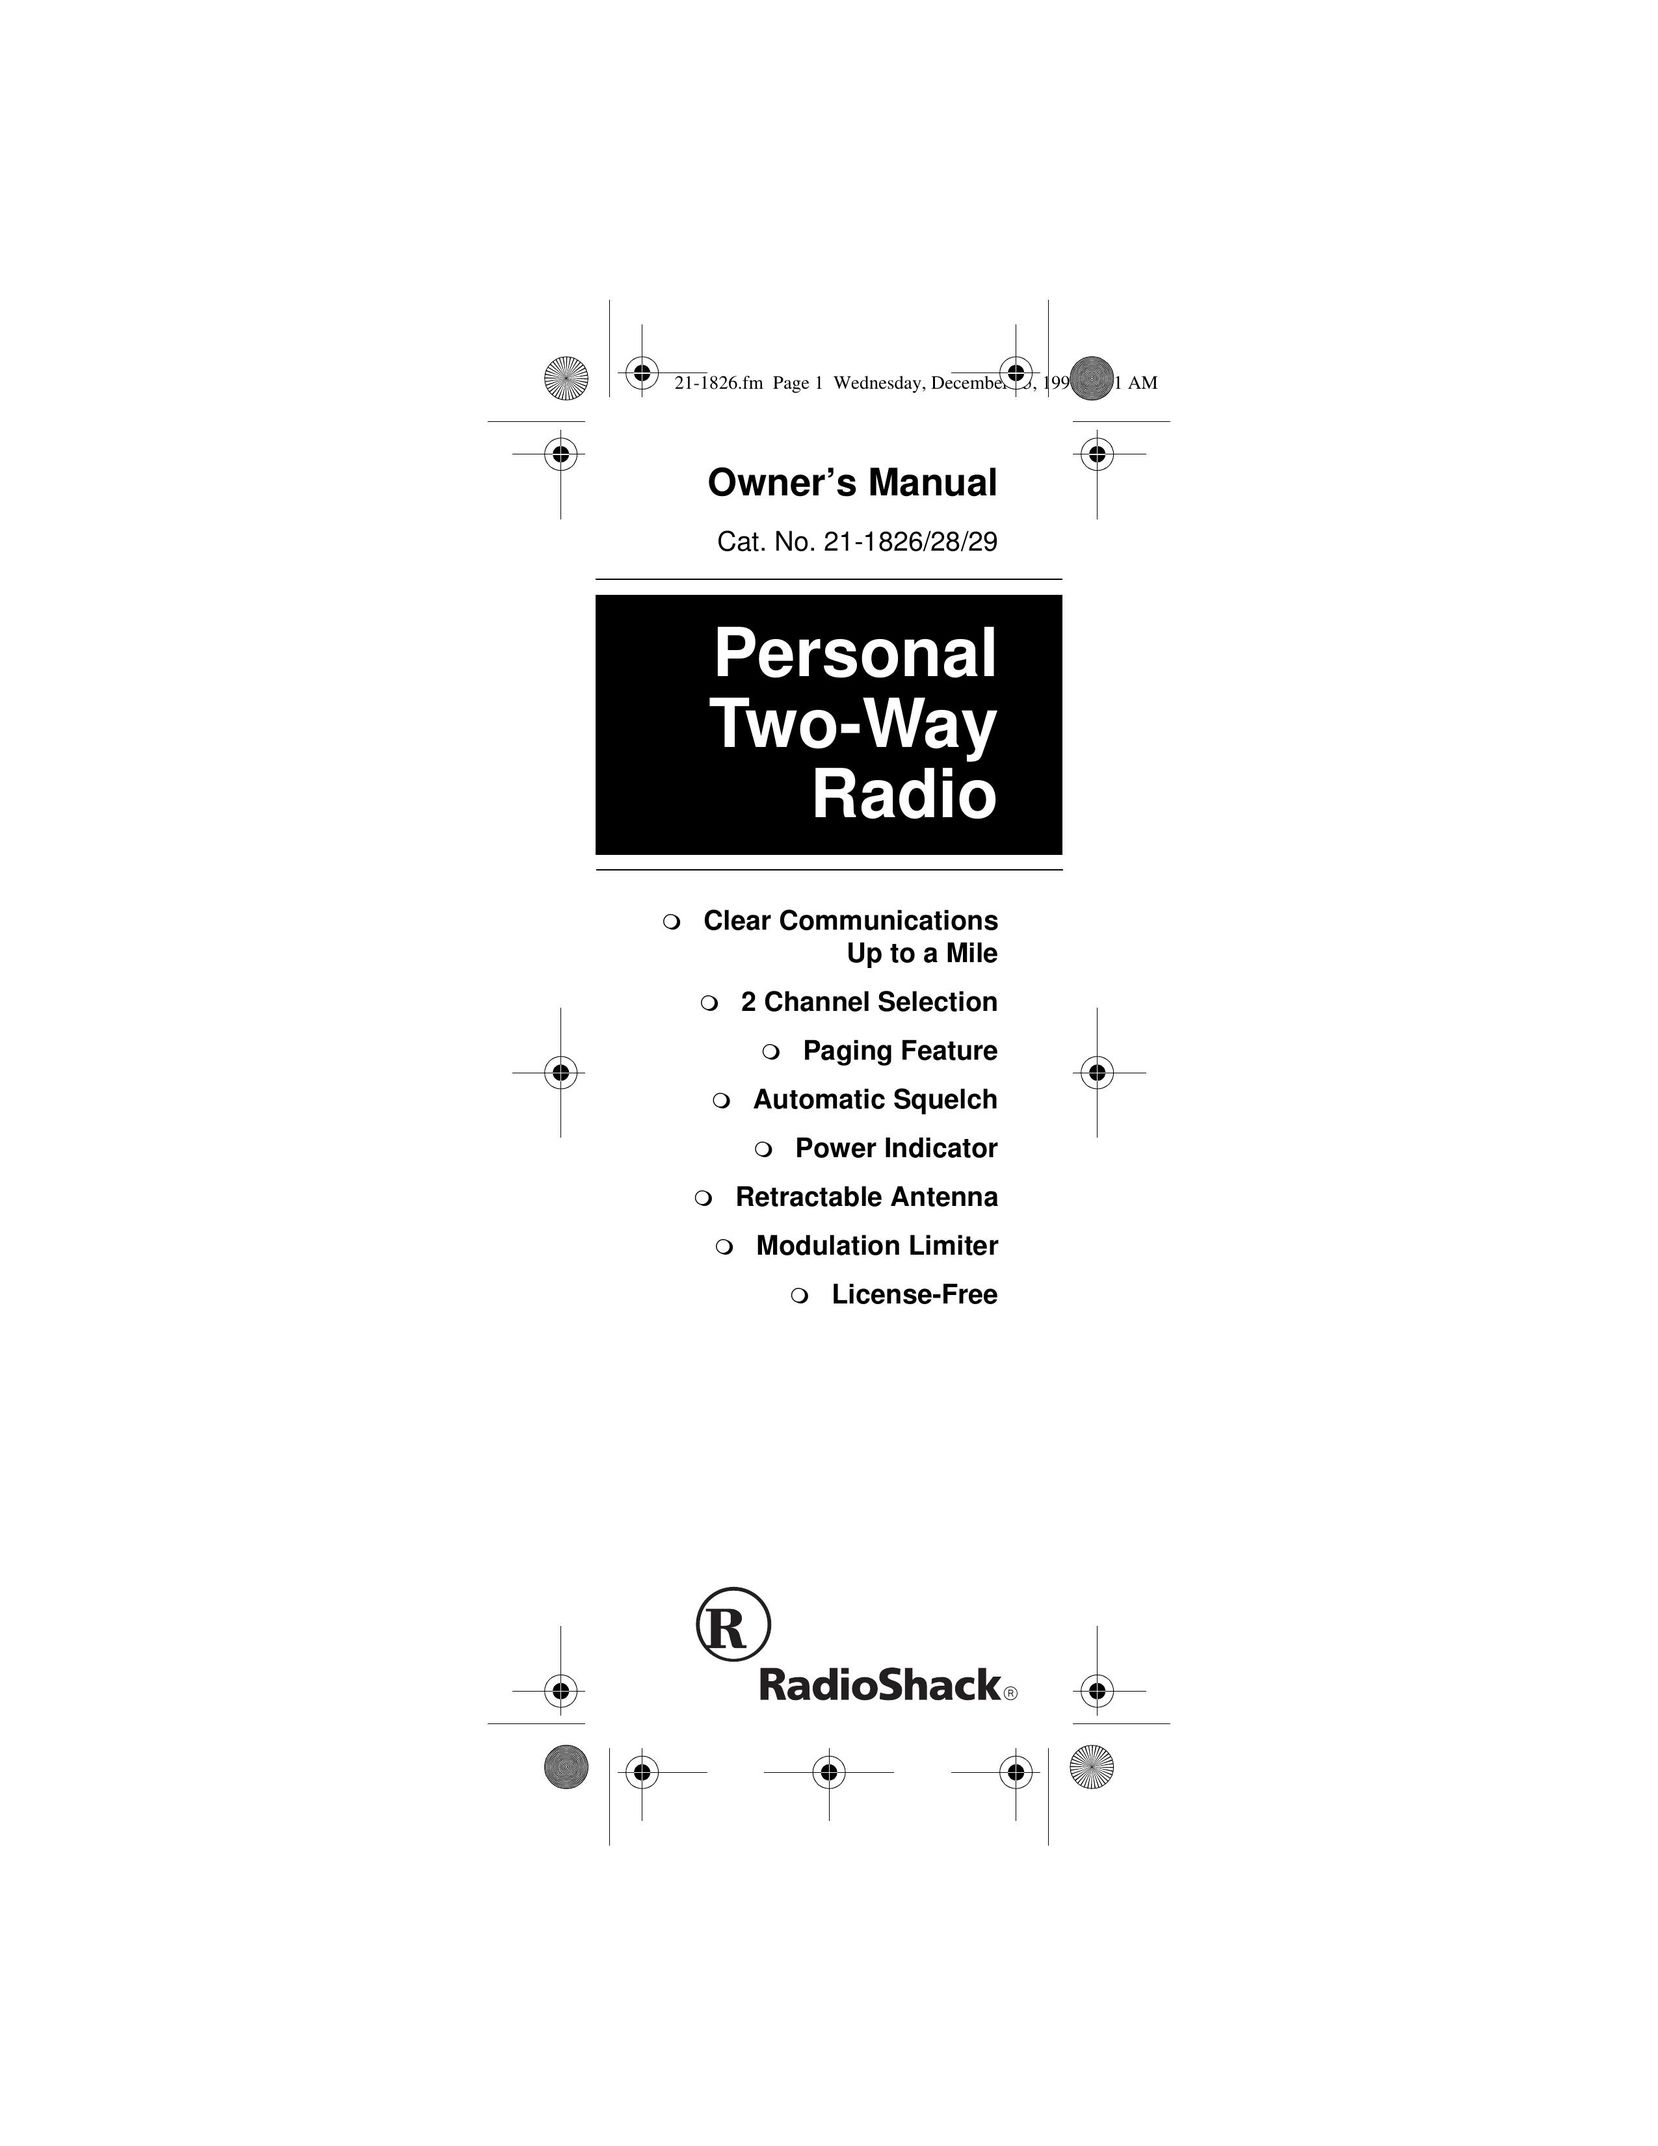 Radio Shack 21-1826 Two-Way Radio User Manual